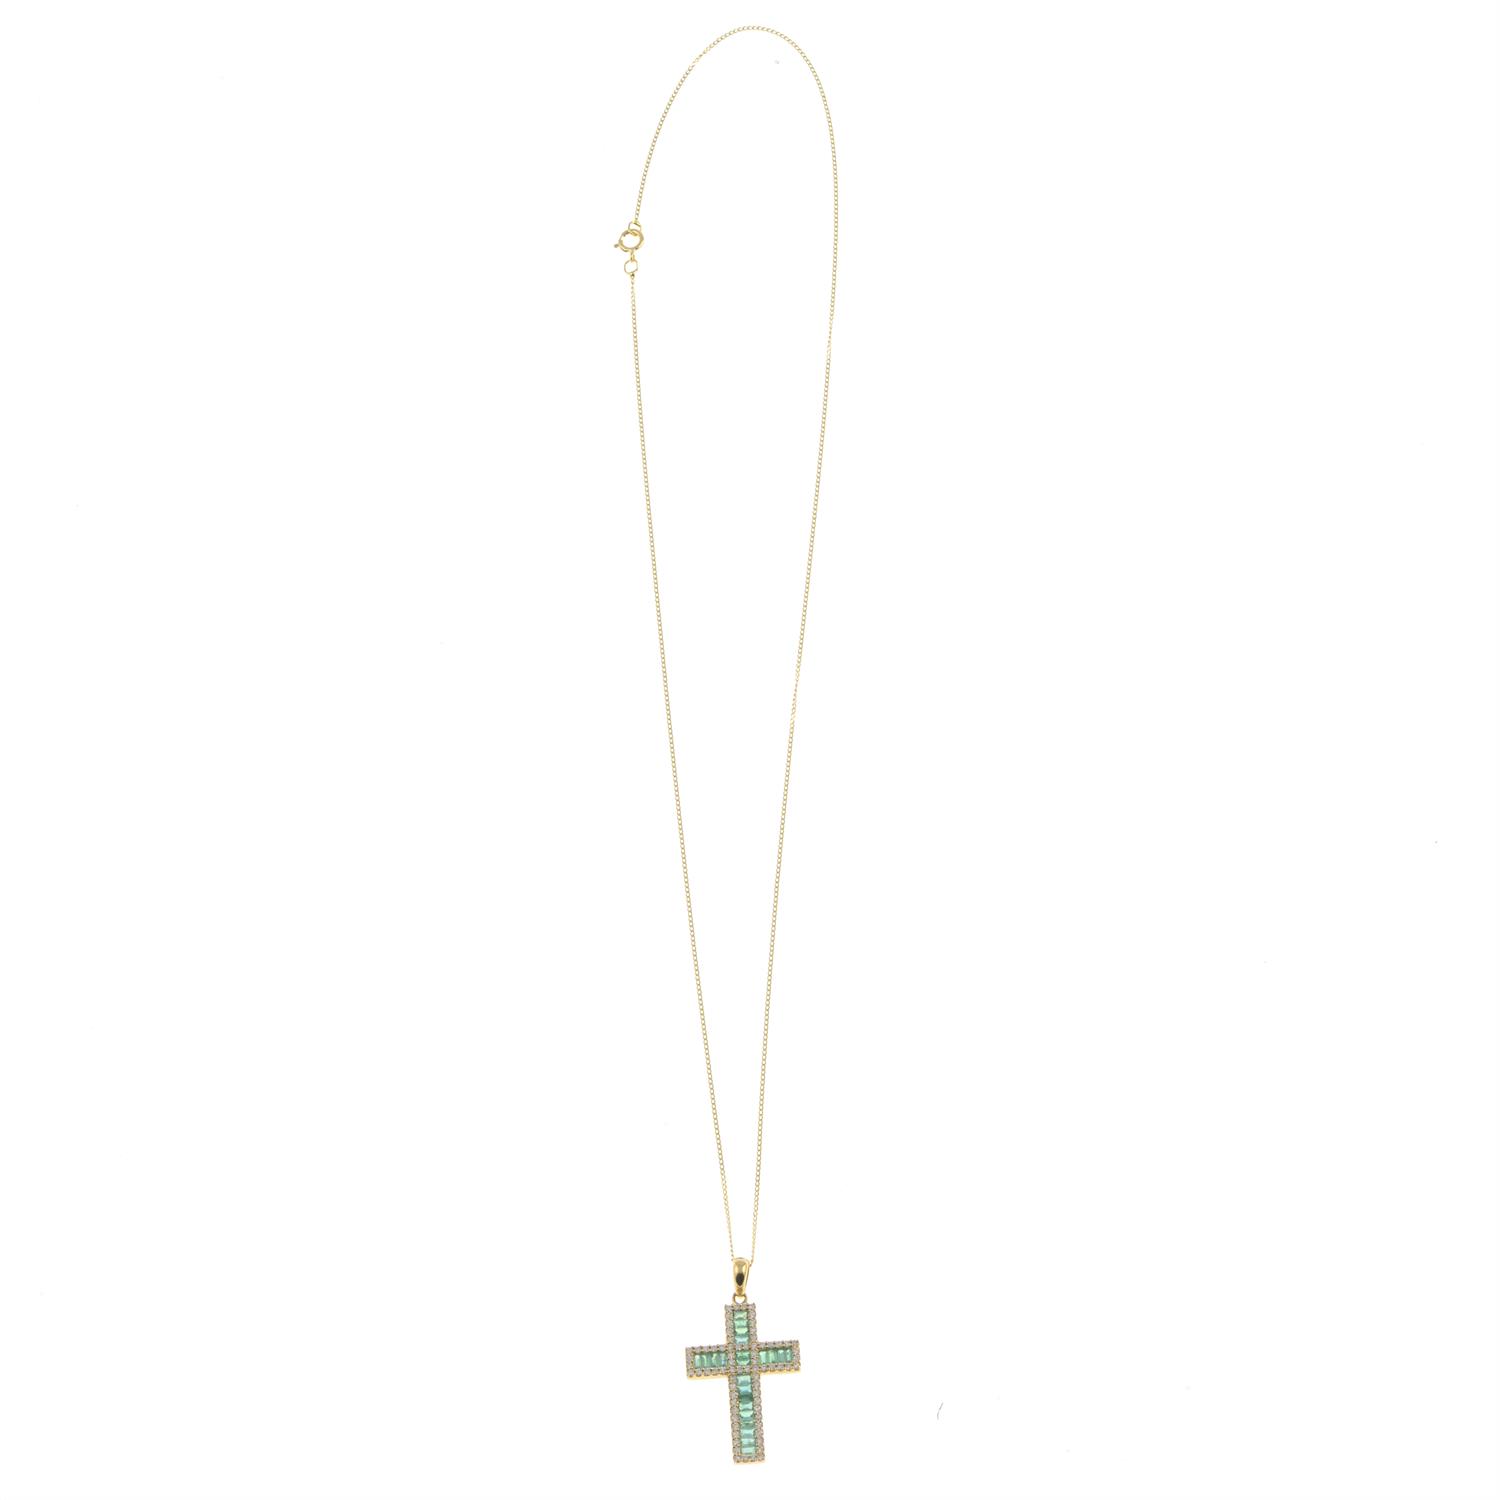 18ct gold emerald & diamond cross pendant, with chain - Image 2 of 2